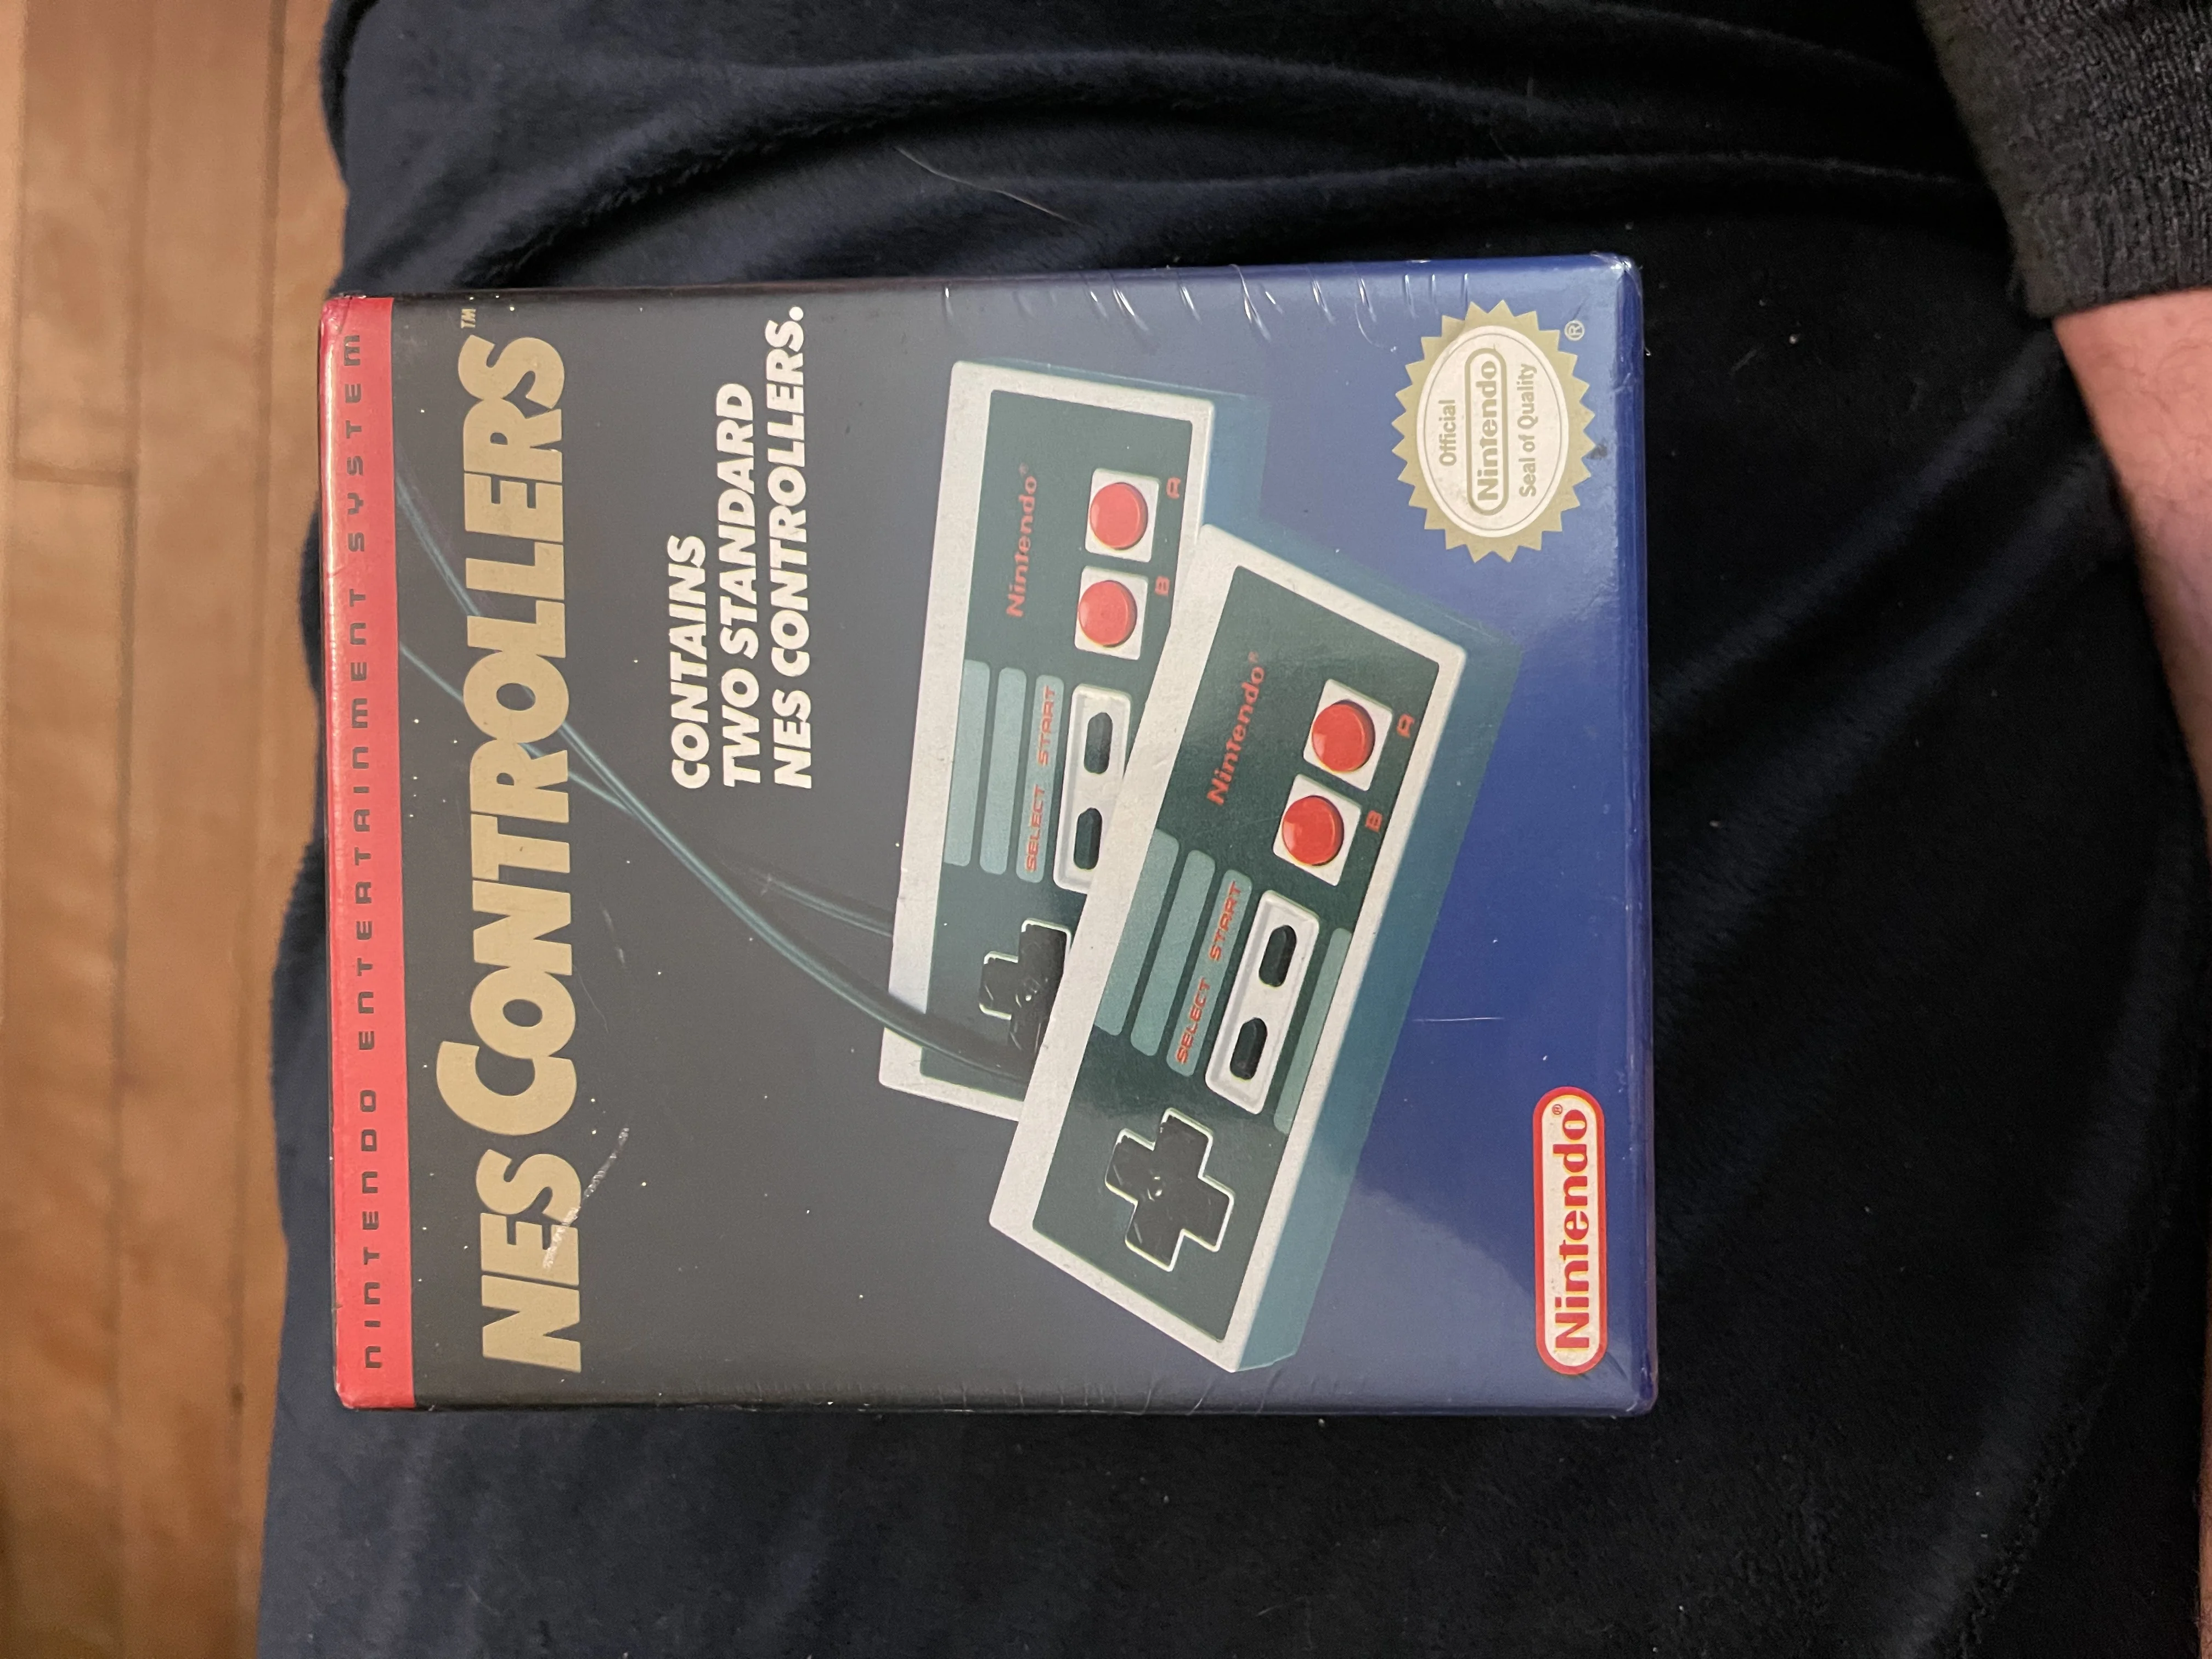  NES Controller 2 Pack Bundle